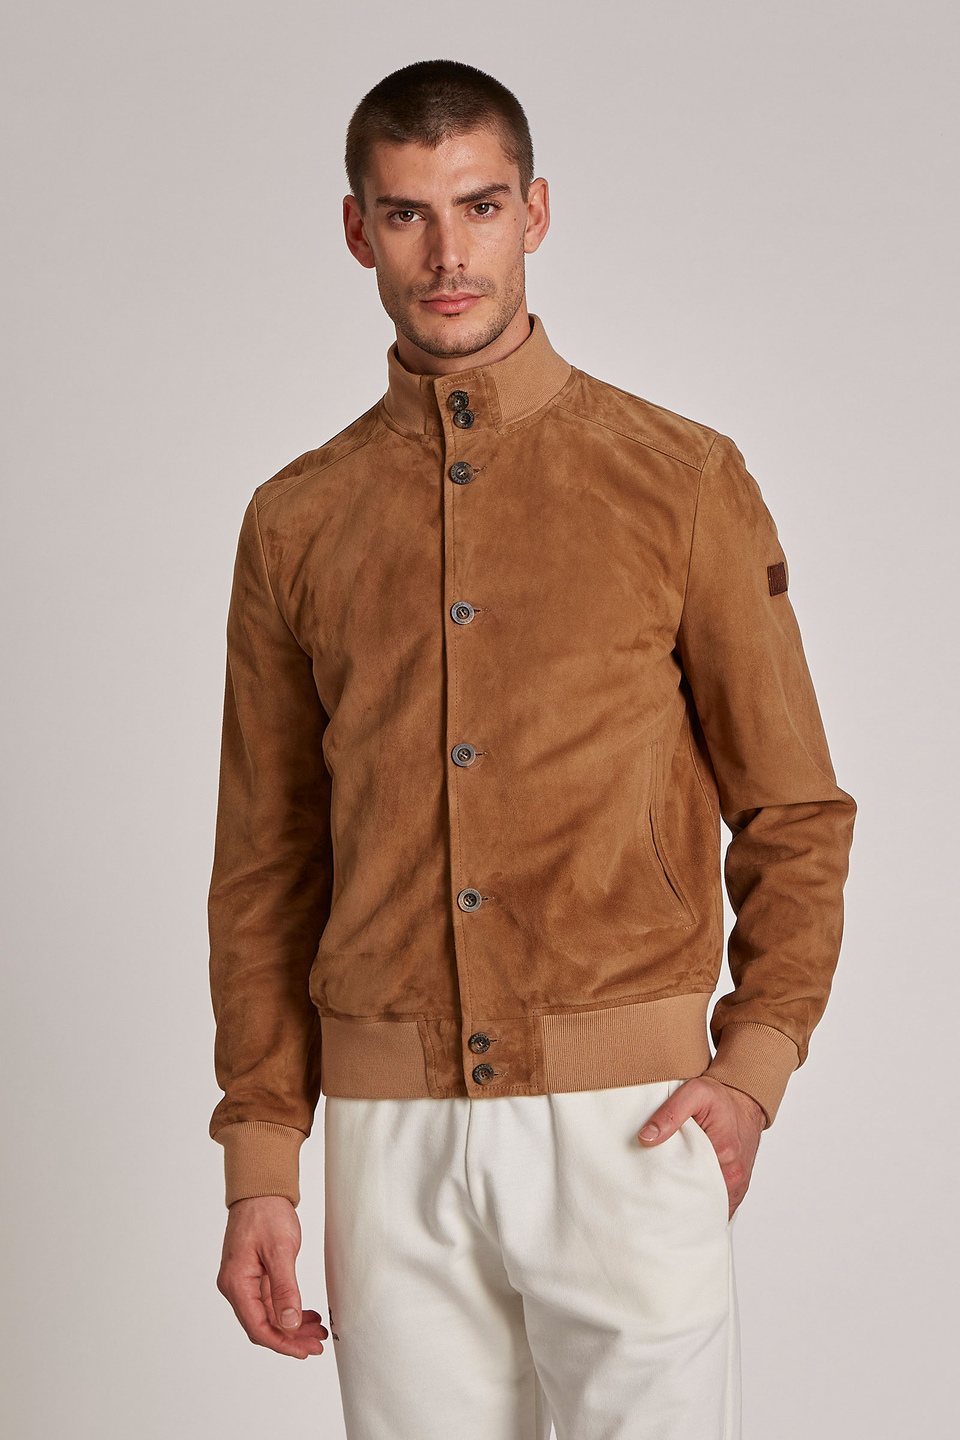 Men's button-up suede bomber jacket - La Martina - Official Online Shop